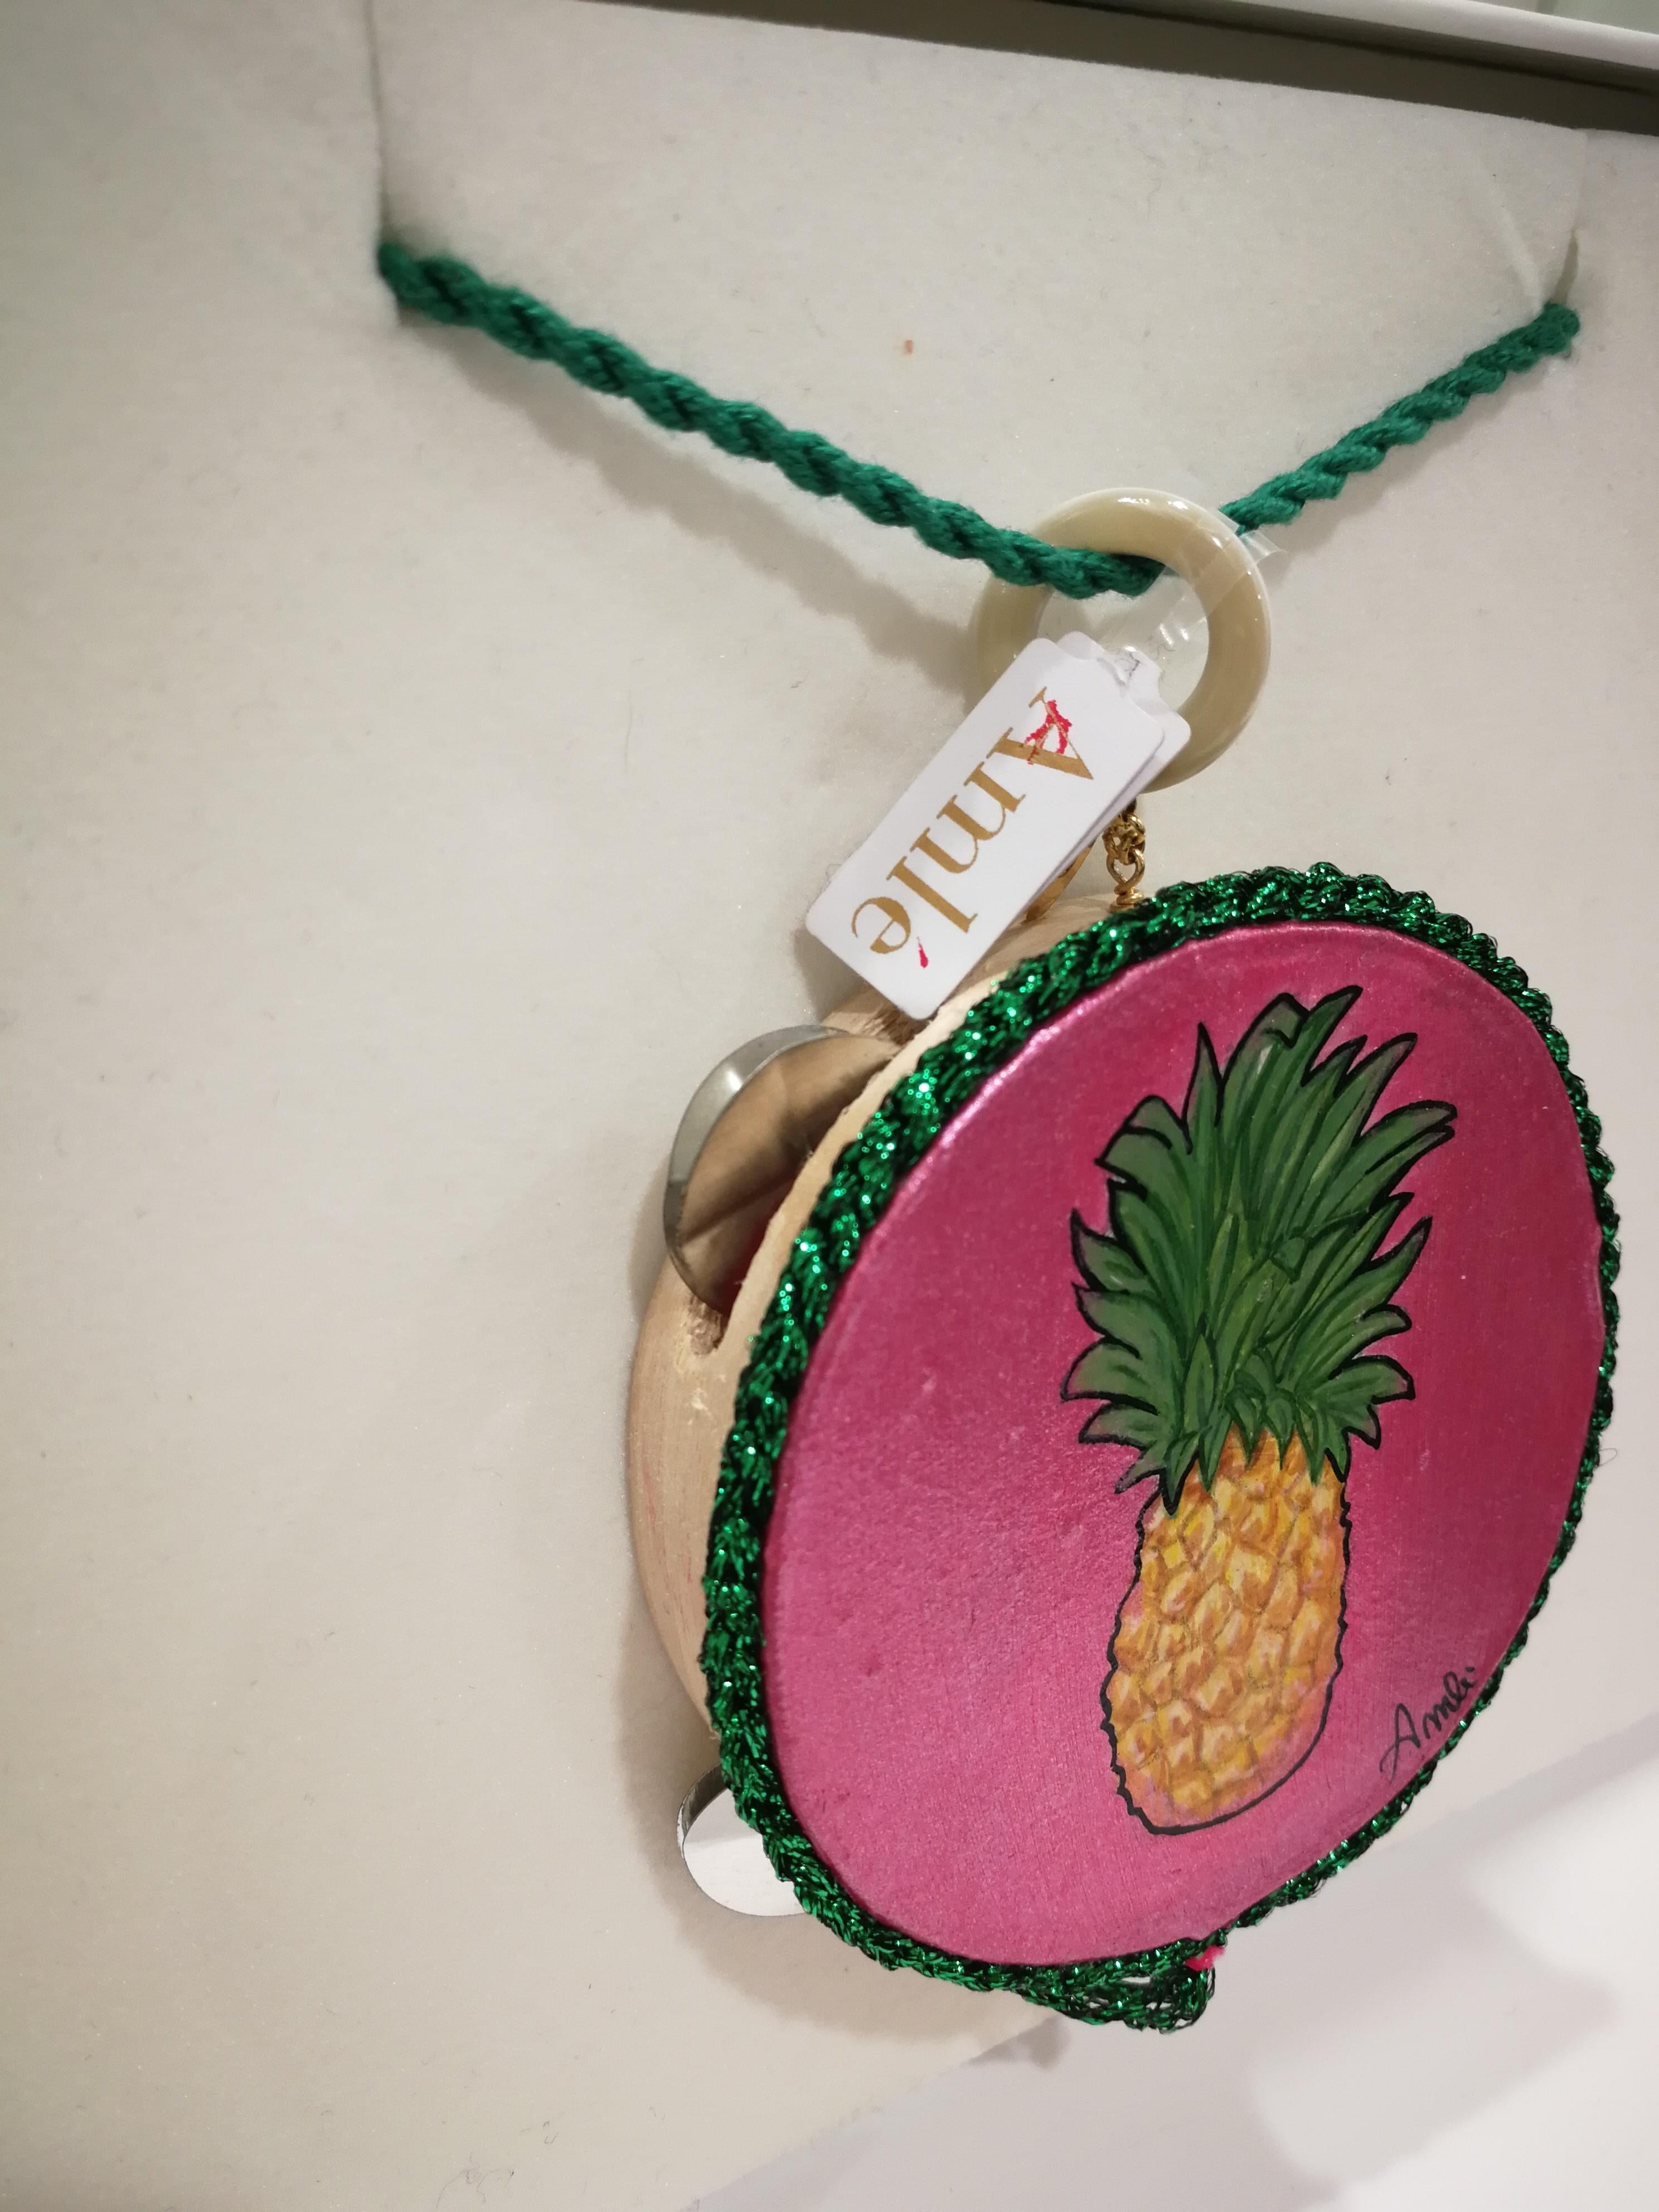 Amlé Tambourine  Fucsia Ananas Handmade and handpainted necklace

Tambourine measurements 7 x 7 cm